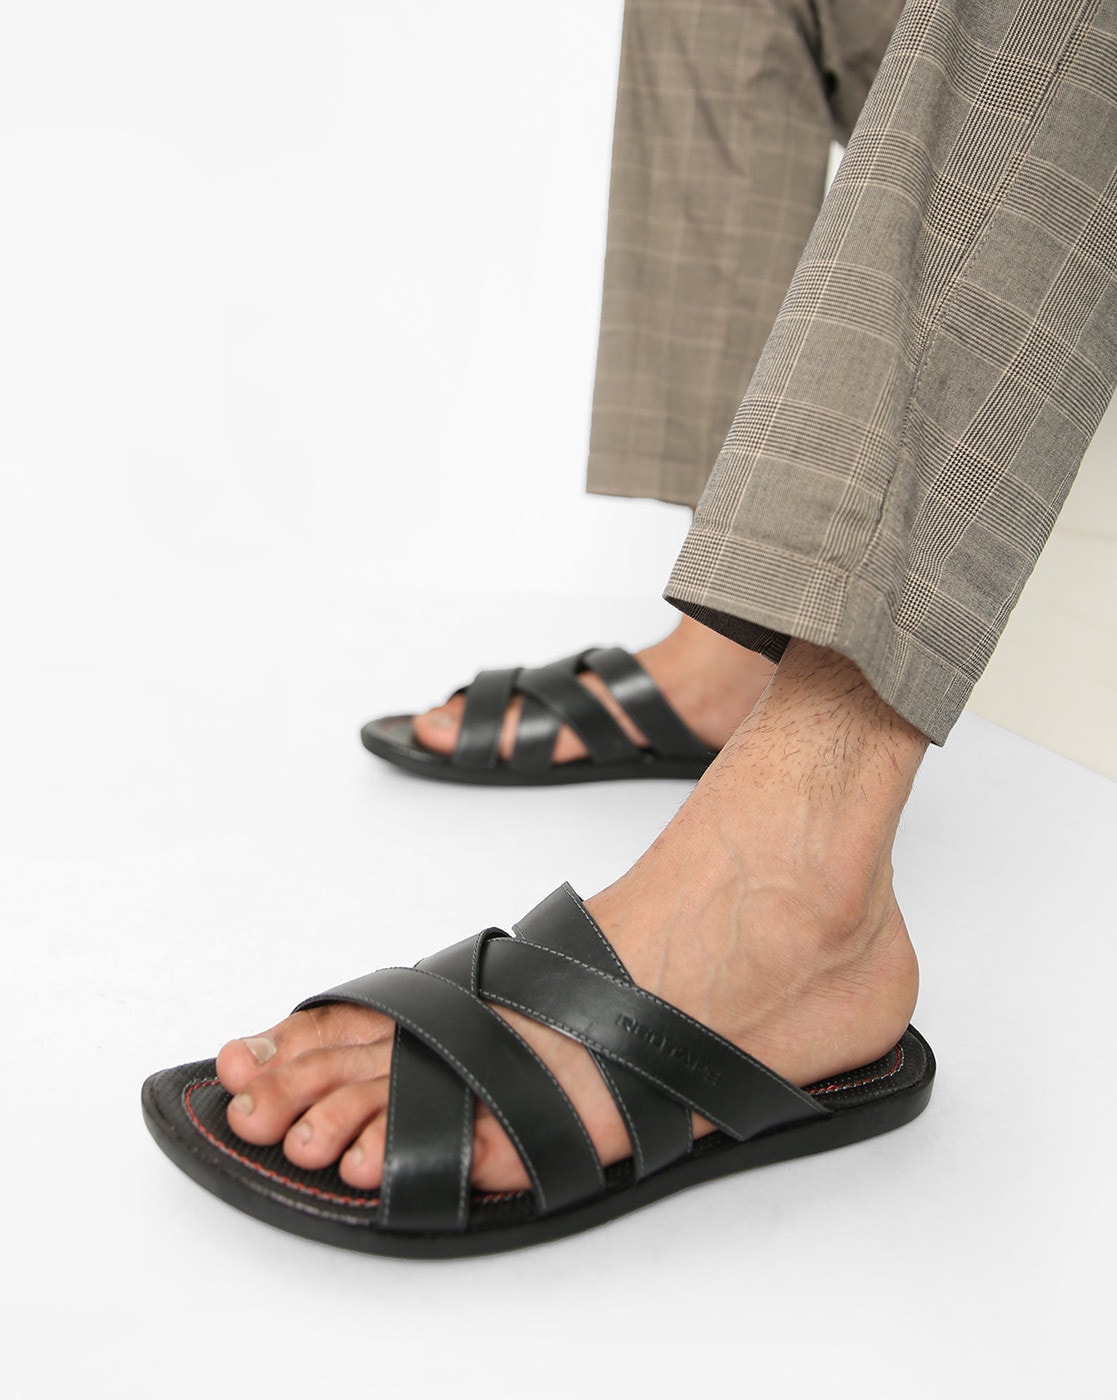 Criss-Cross Ankle Strap Block Heel Sandals/Size-36EUR